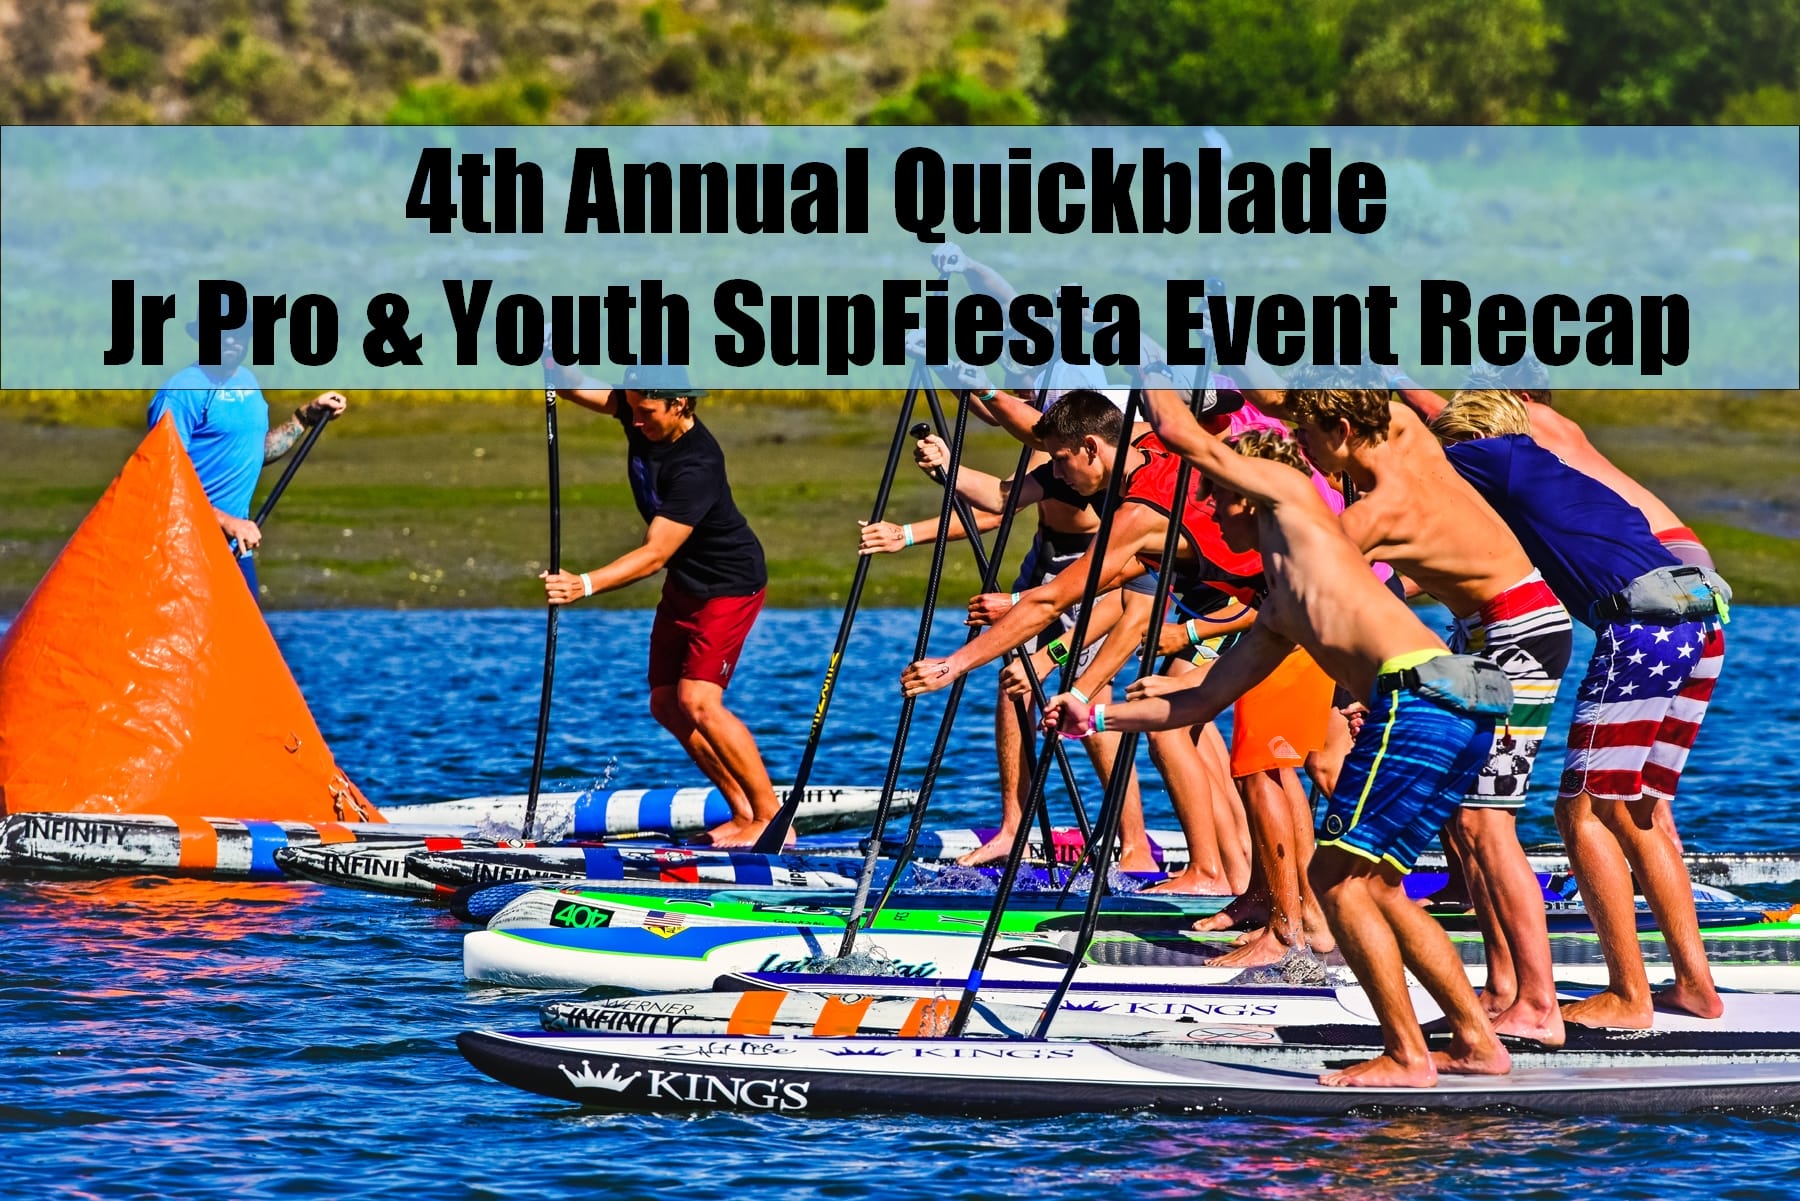 4th Annual Quickblade Jr Pro & Youth SupFiesta Event Recap